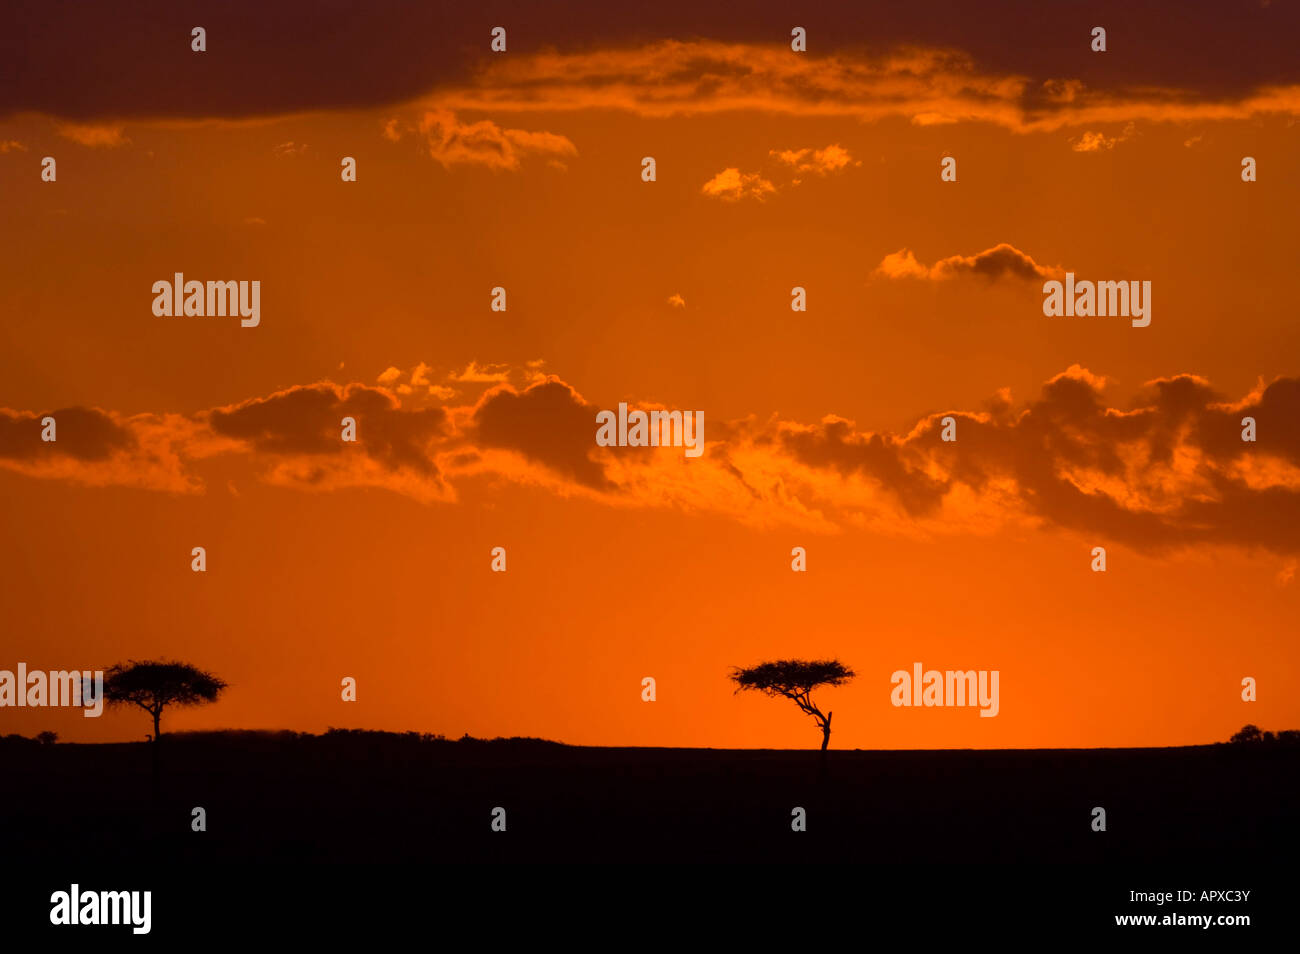 Roter Himmel Sonnenuntergang mit Bäumen Silhouette am Horizont Stockfoto